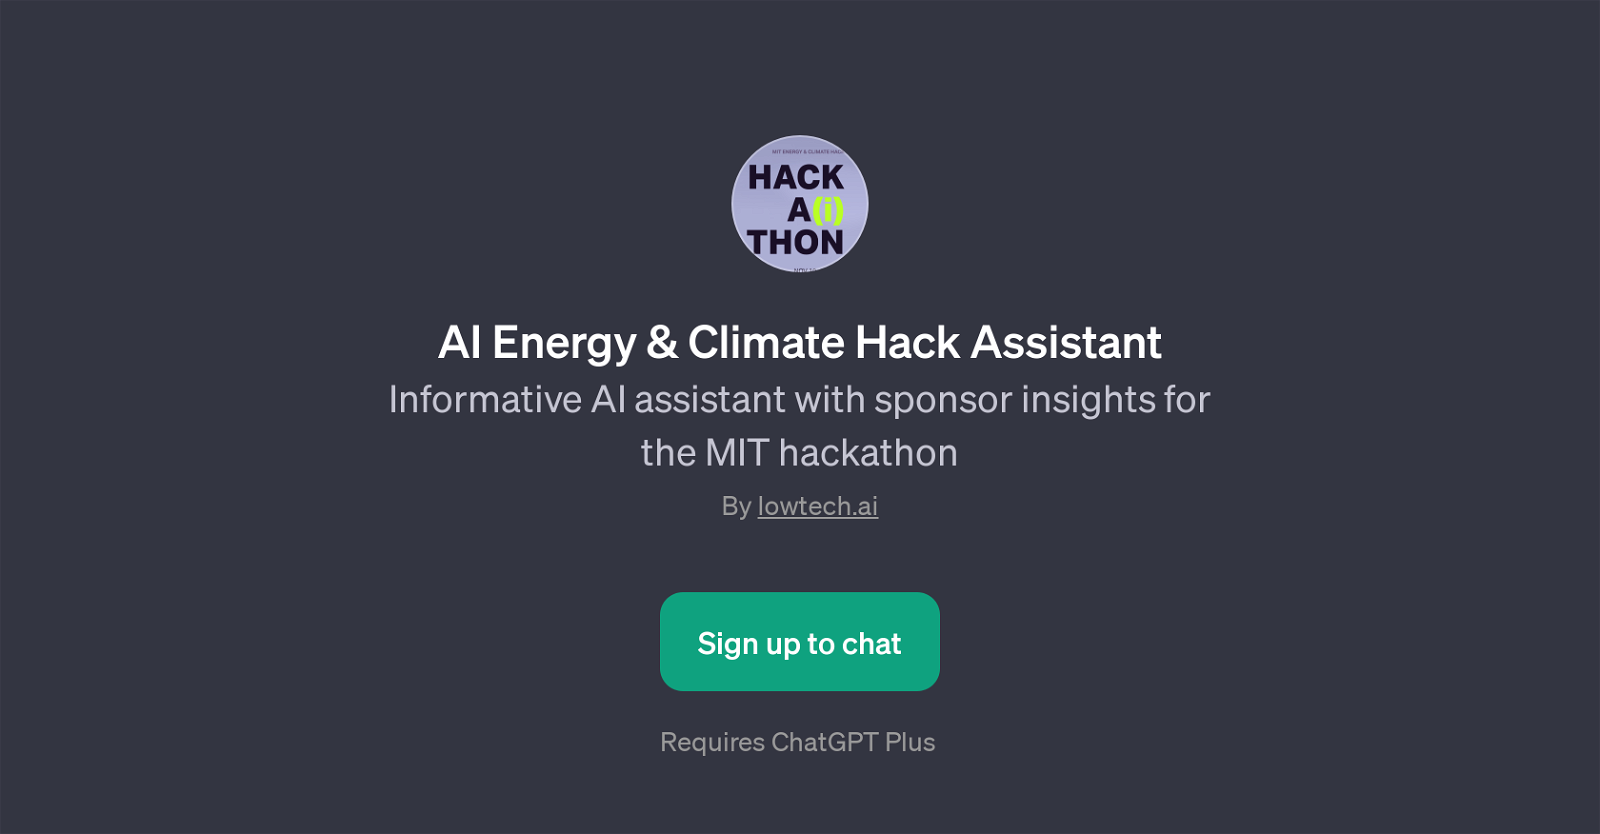 AI Energy & Climate Hack Assistant website